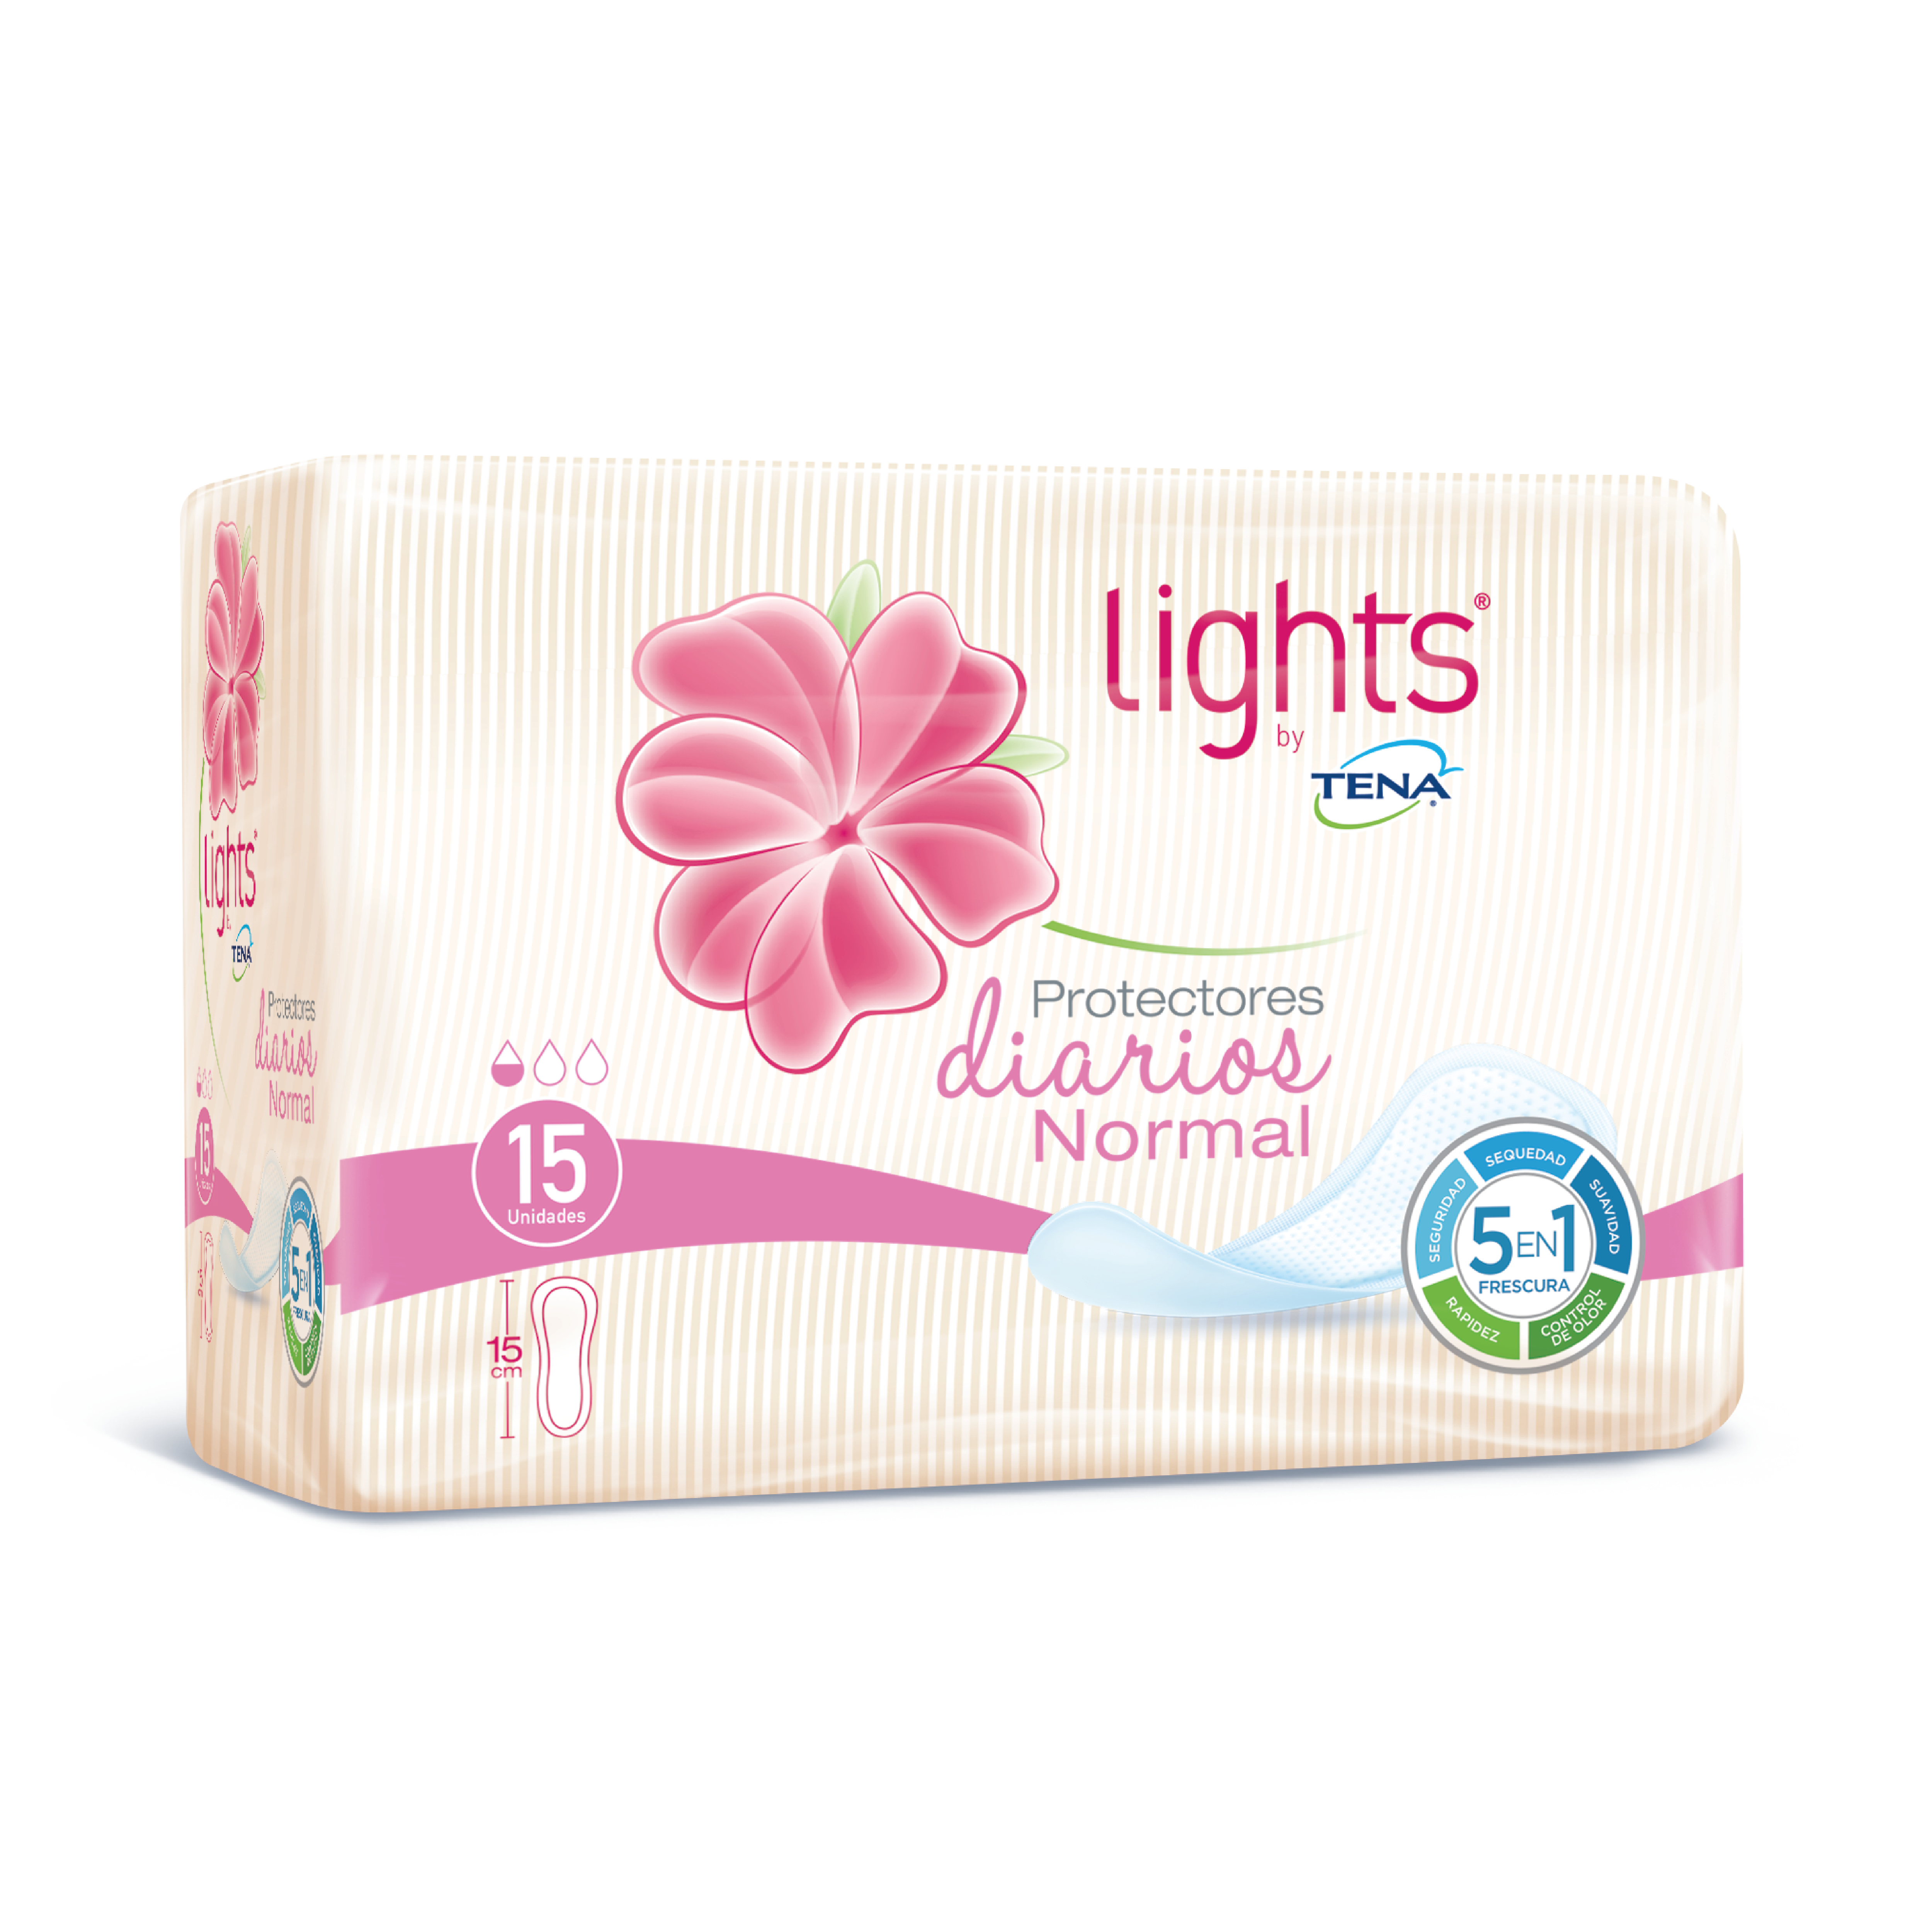 Imagen Inactiva Protector Femenino Lights by TENA Normal x 15 Und 2